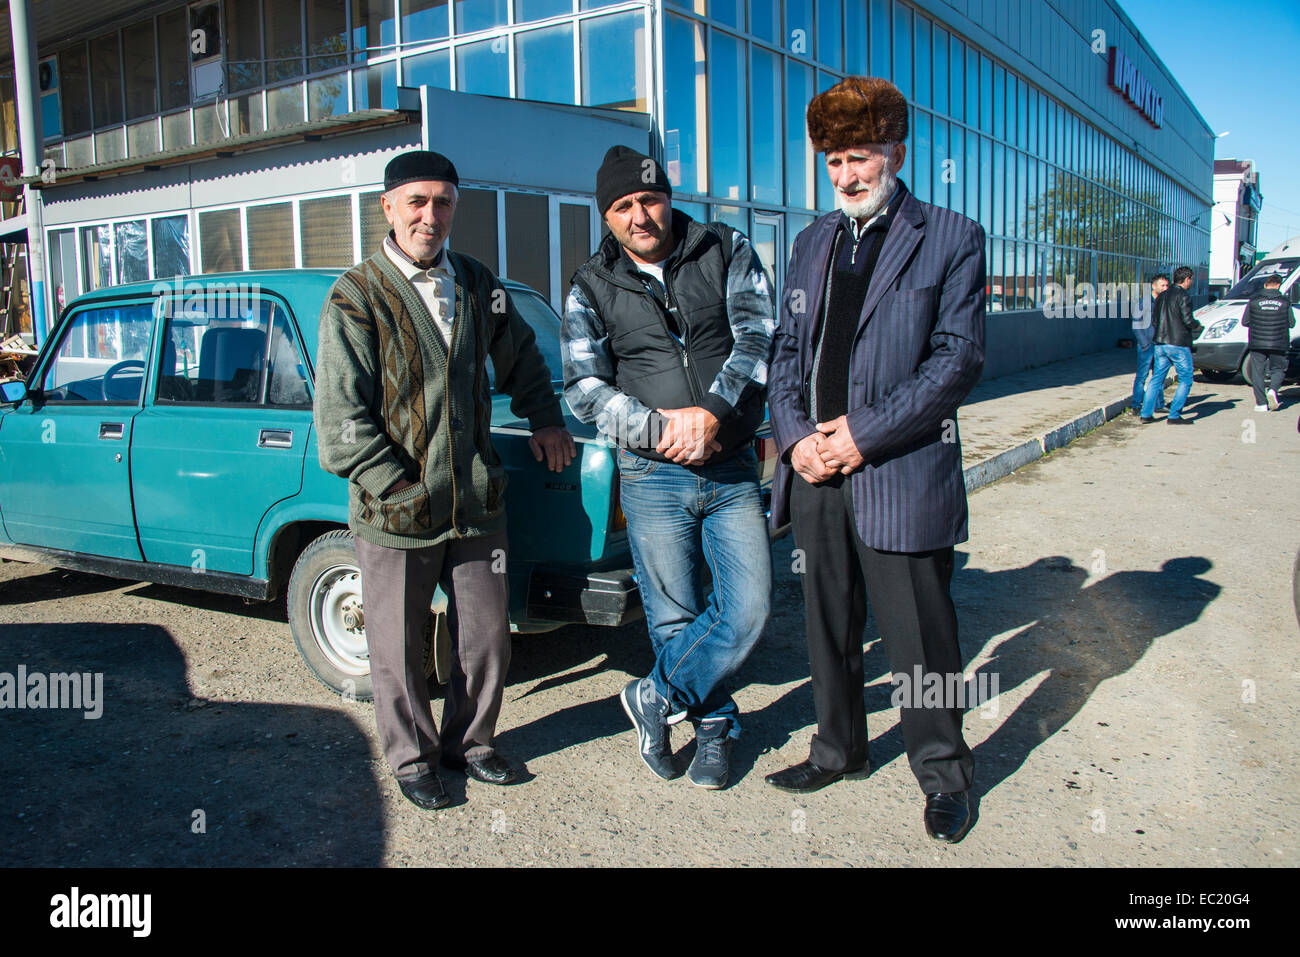 Friendly taxi drivers, Chechnya, Caucasus, Russia Stock Photo